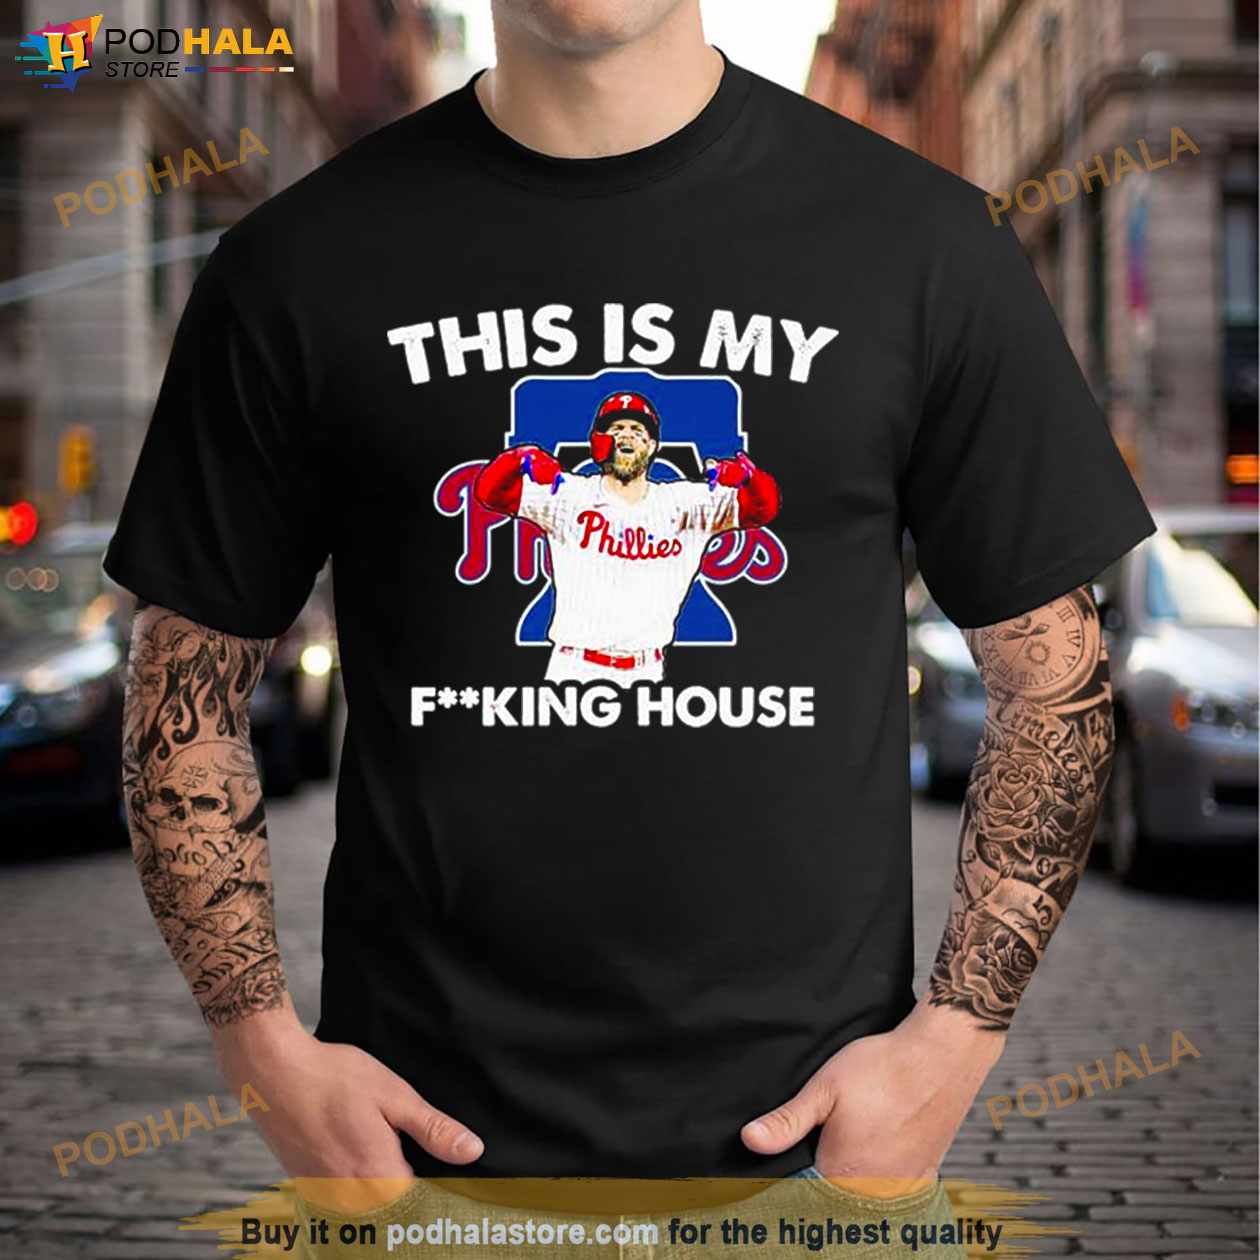 Bryce Harper Jerseys, Bryce Harper Shirt, MLB Bryce Harper Gear &  Merchandise